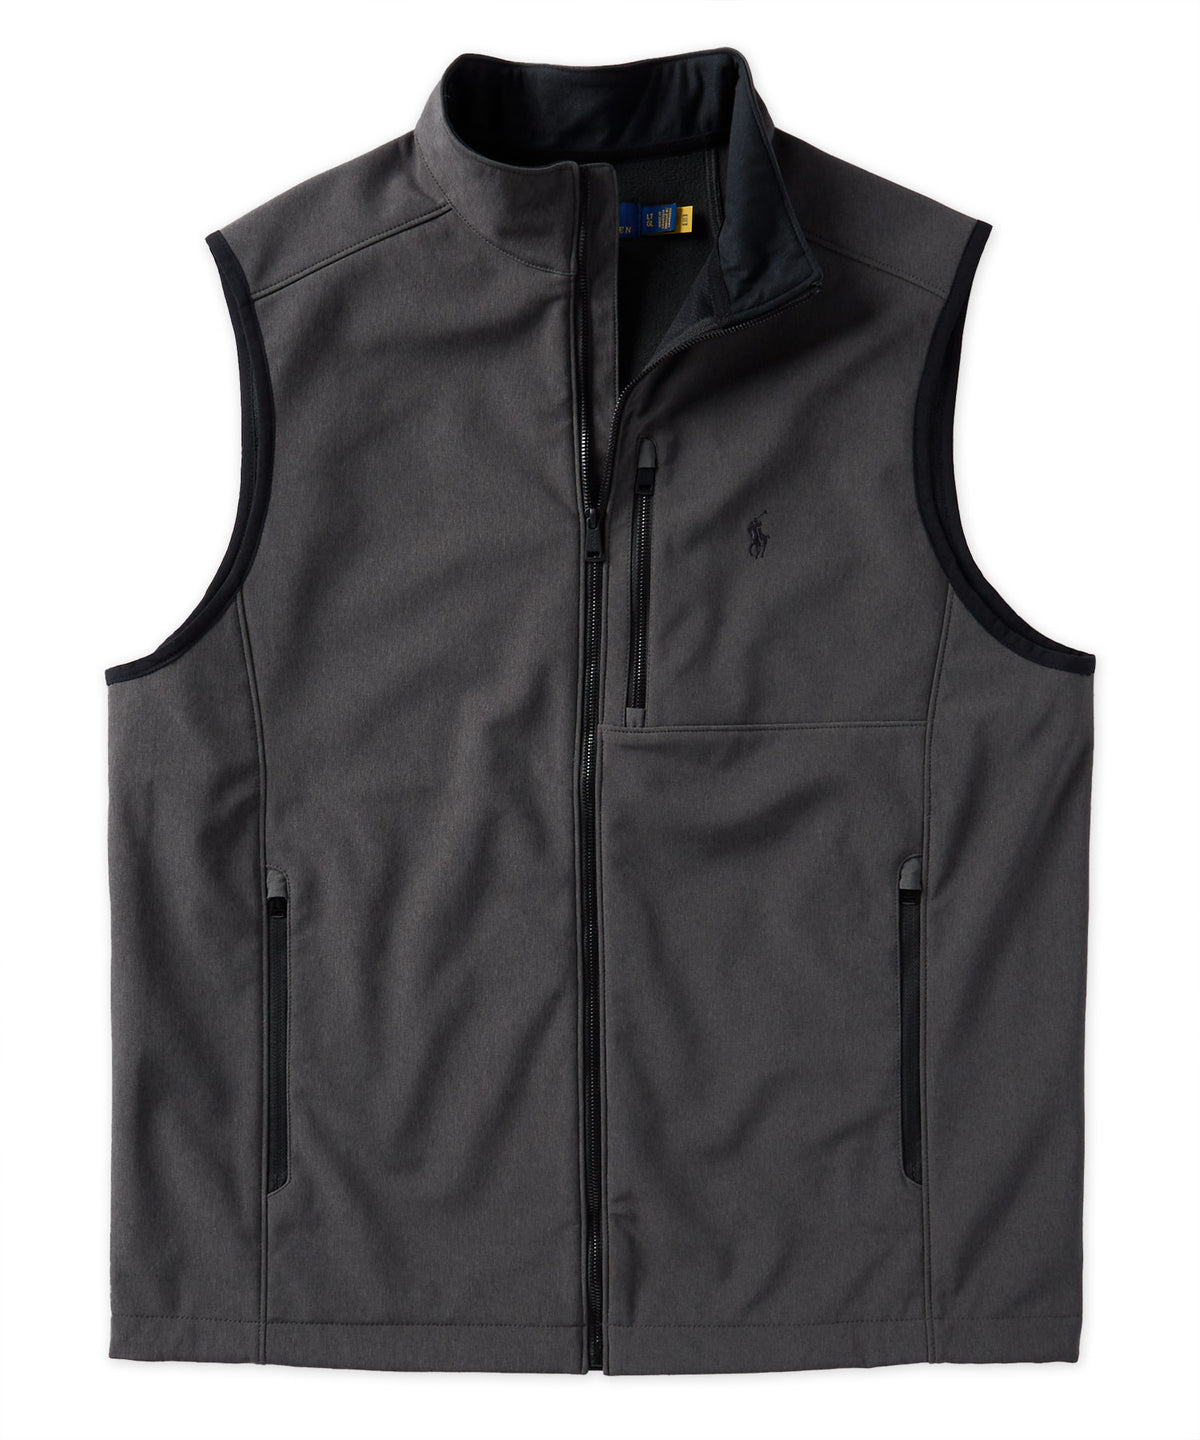 Polo Ralph Lauren Barrier Vest, Men's Big & Tall